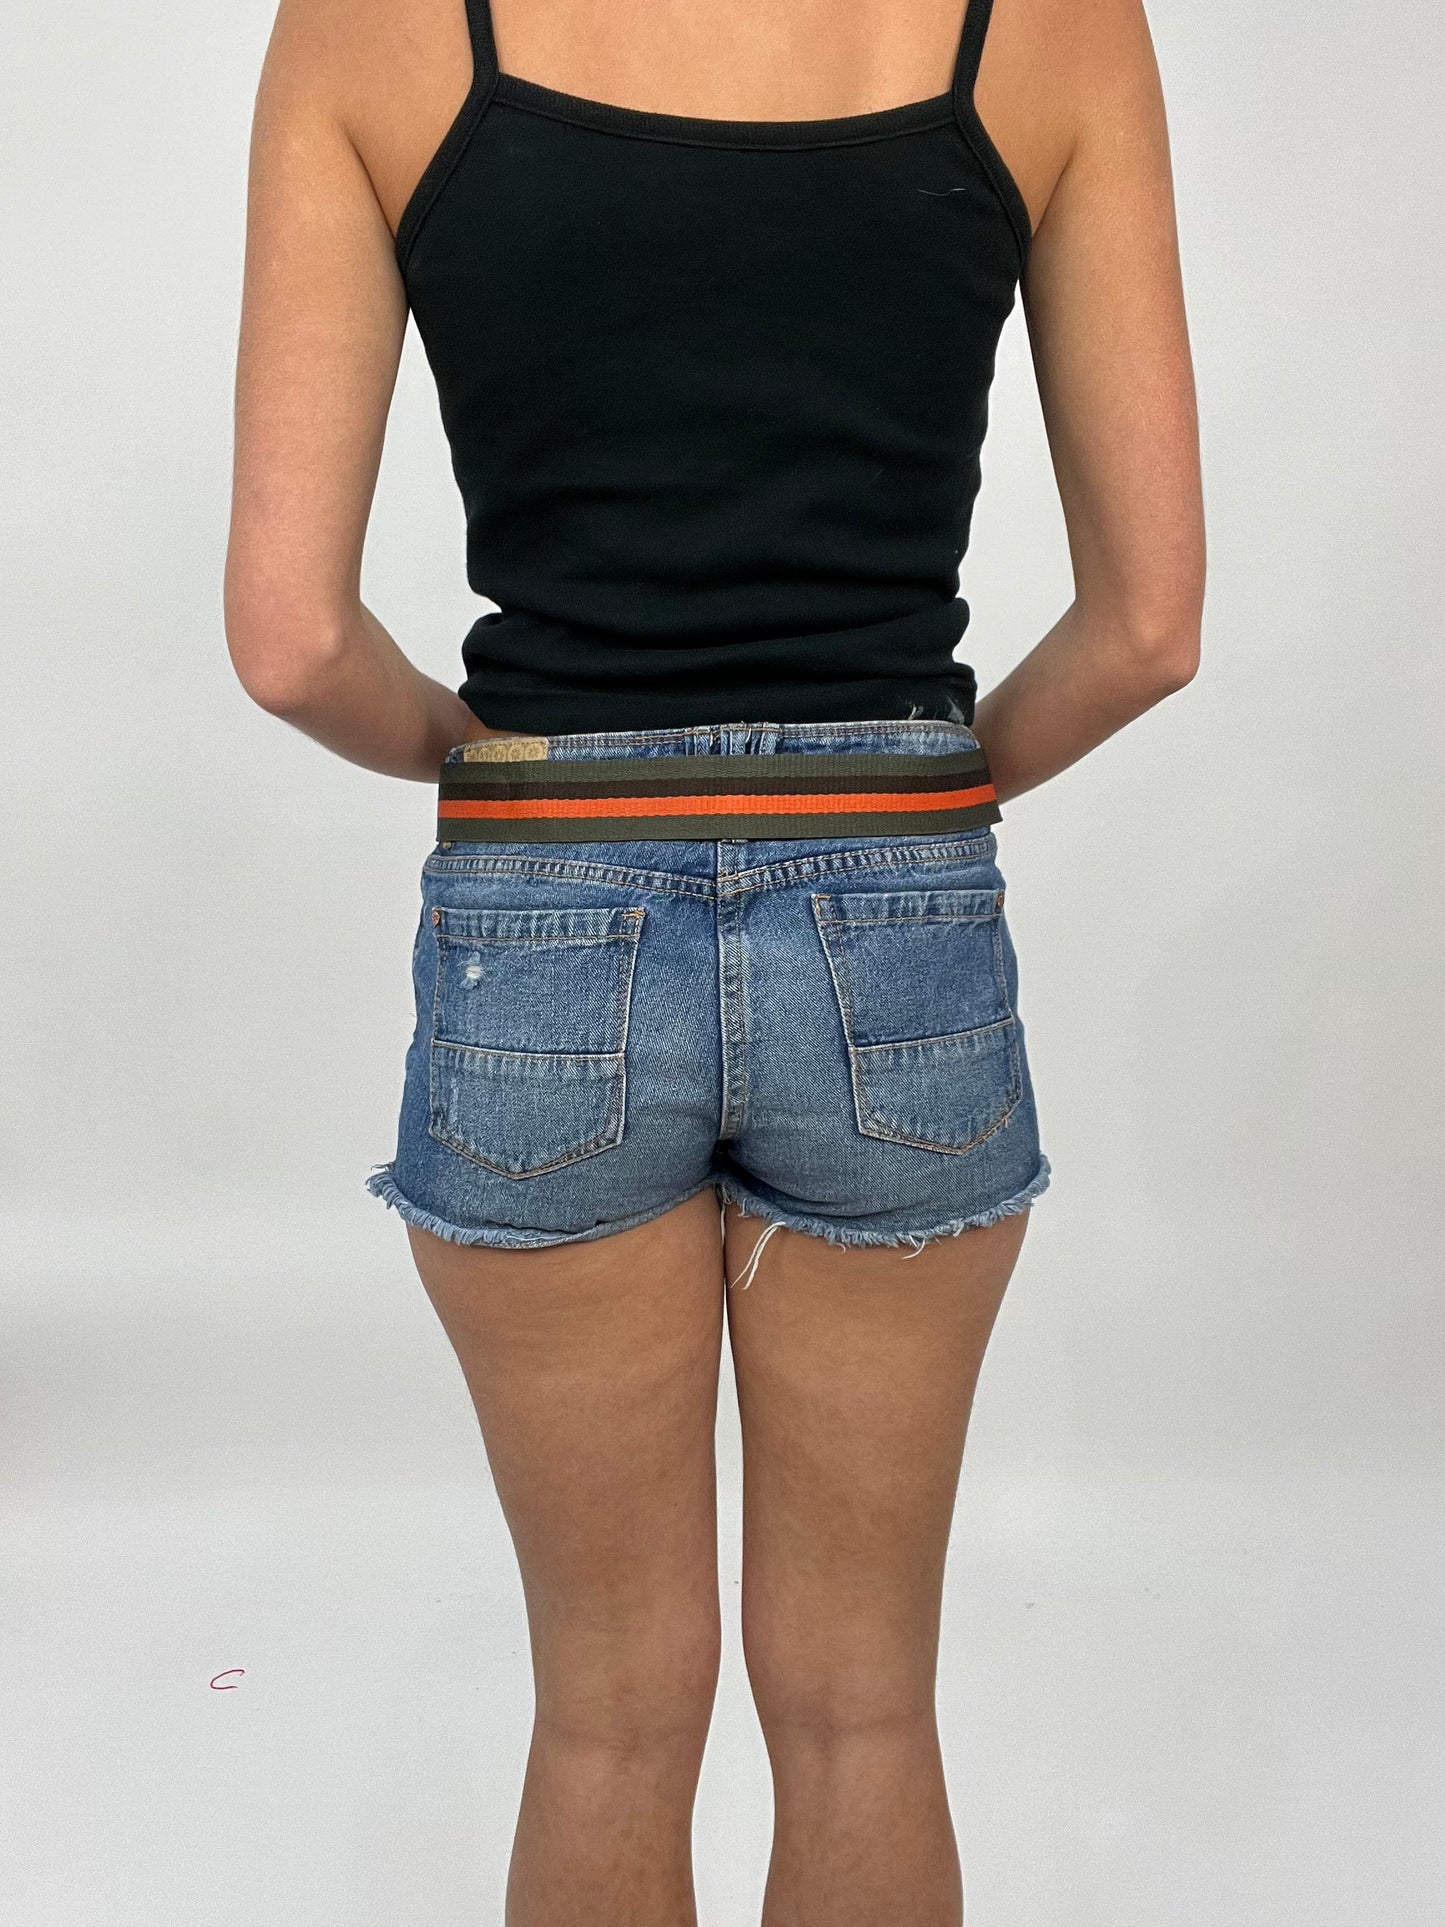 COCONUT GIRL DROP | orange and khaki striped belt